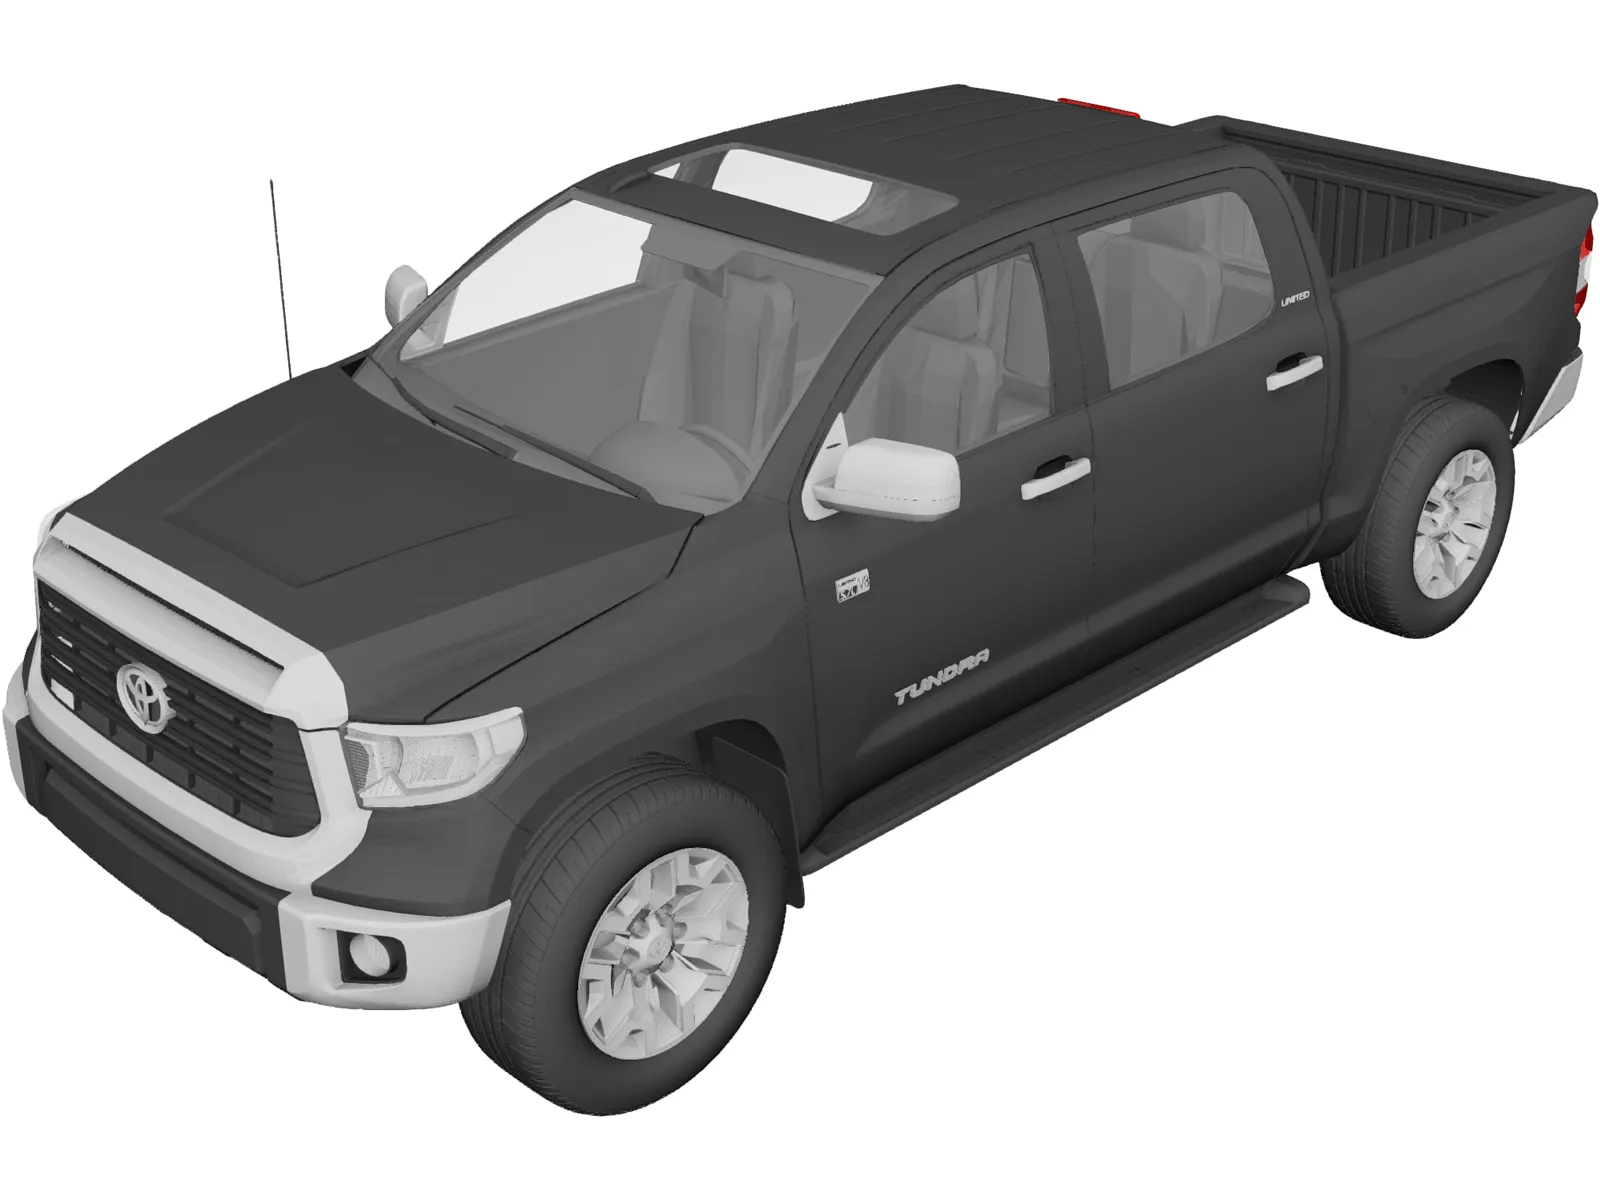 Toyota Tundra (2017) 3D Model